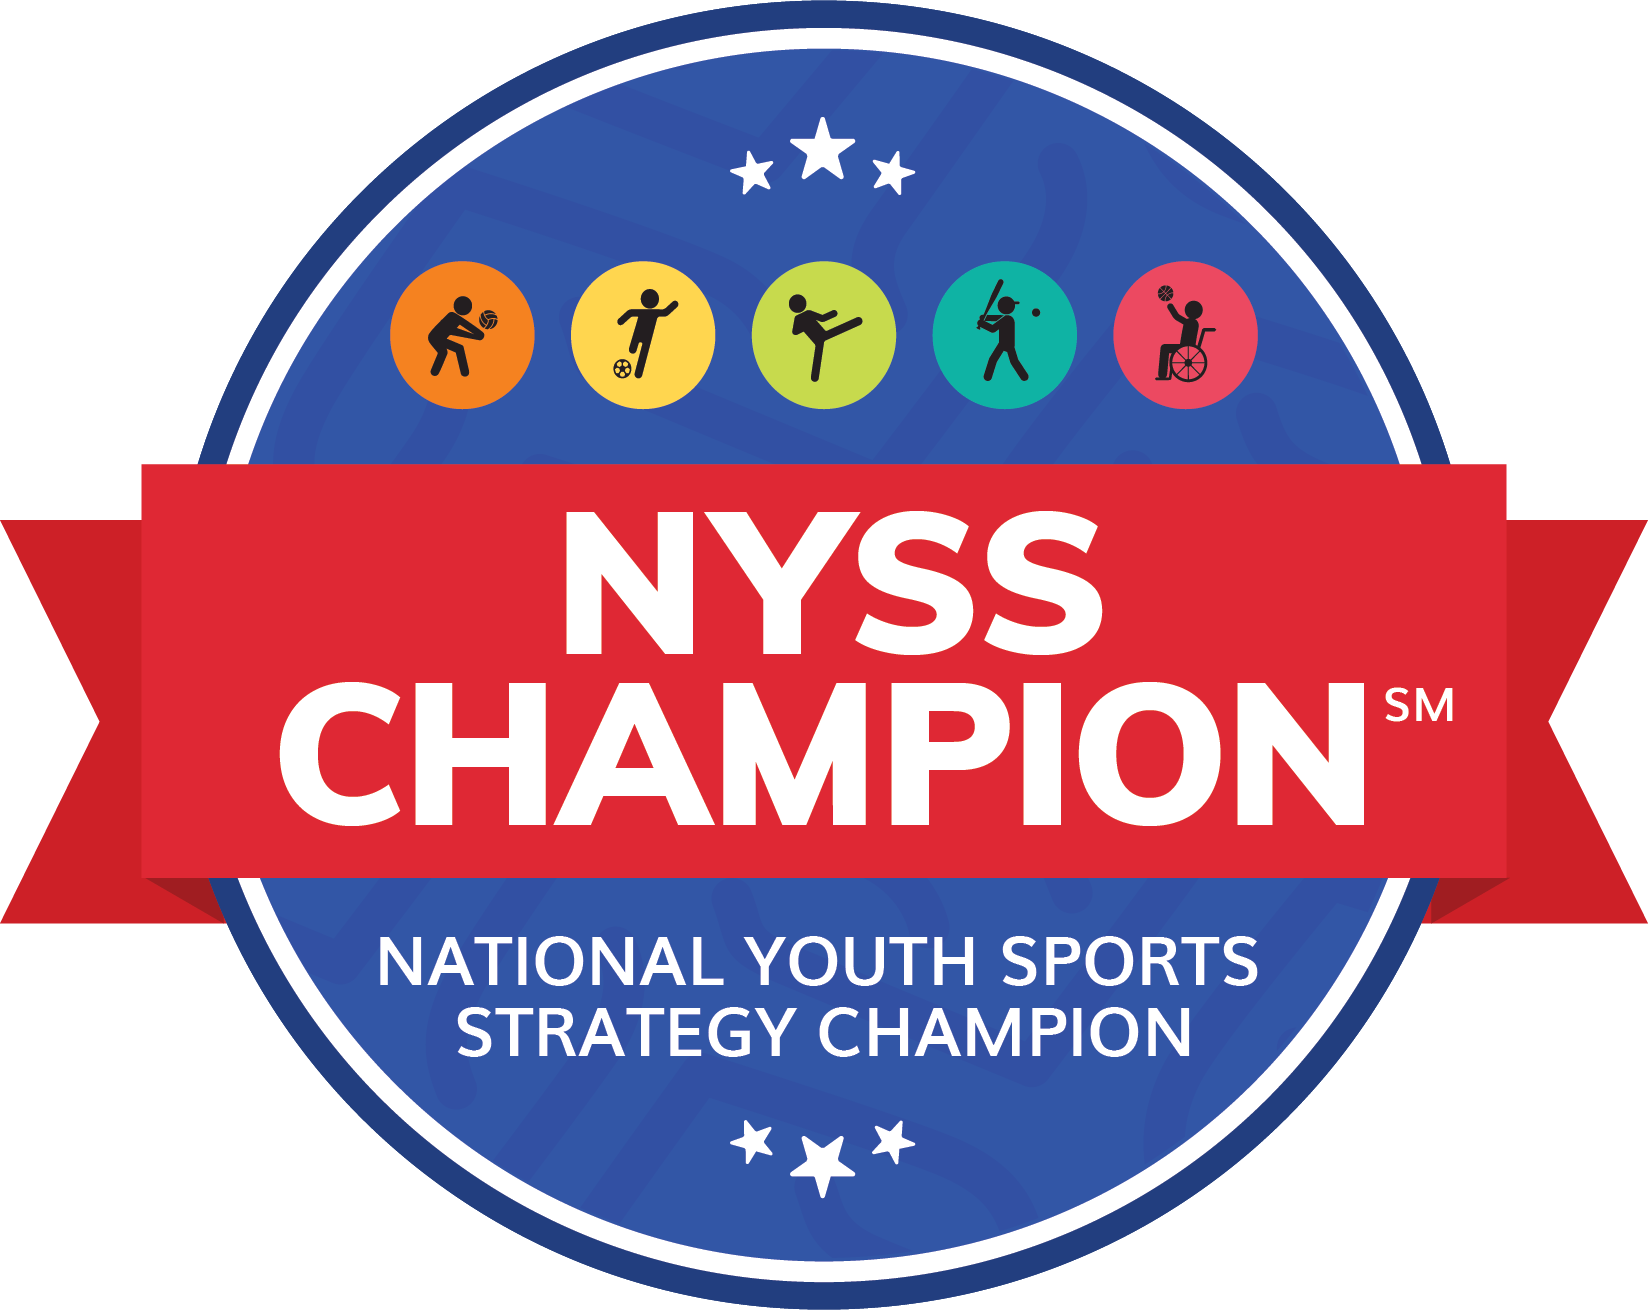 NYSS Champion badge